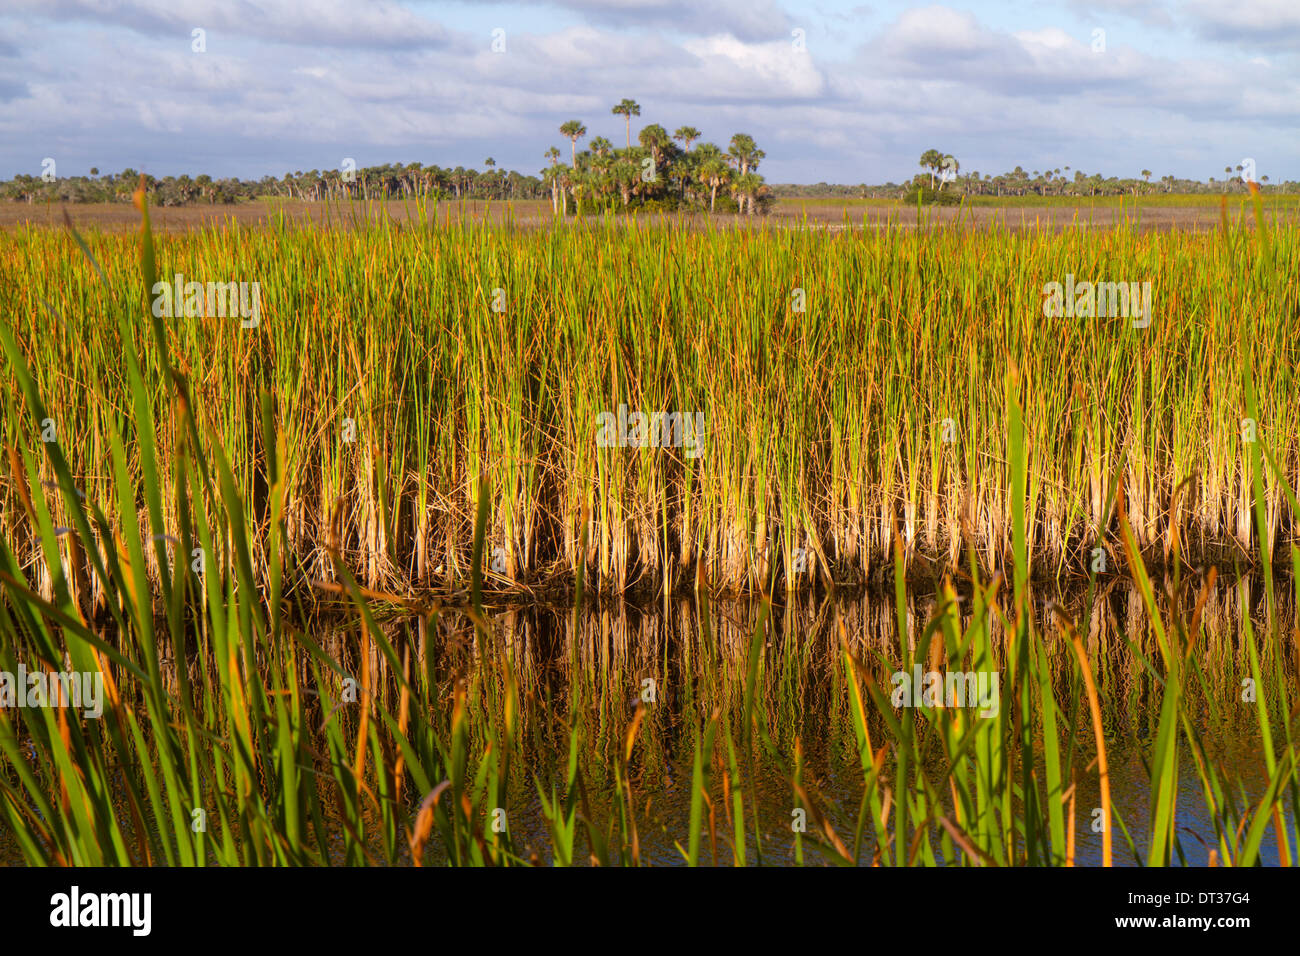 Florida,Everglades,Big Cypress National Preserve,Tamiami Trail,US 41,sawgrass,palm tree hammock,FL131109141 Stock Photo